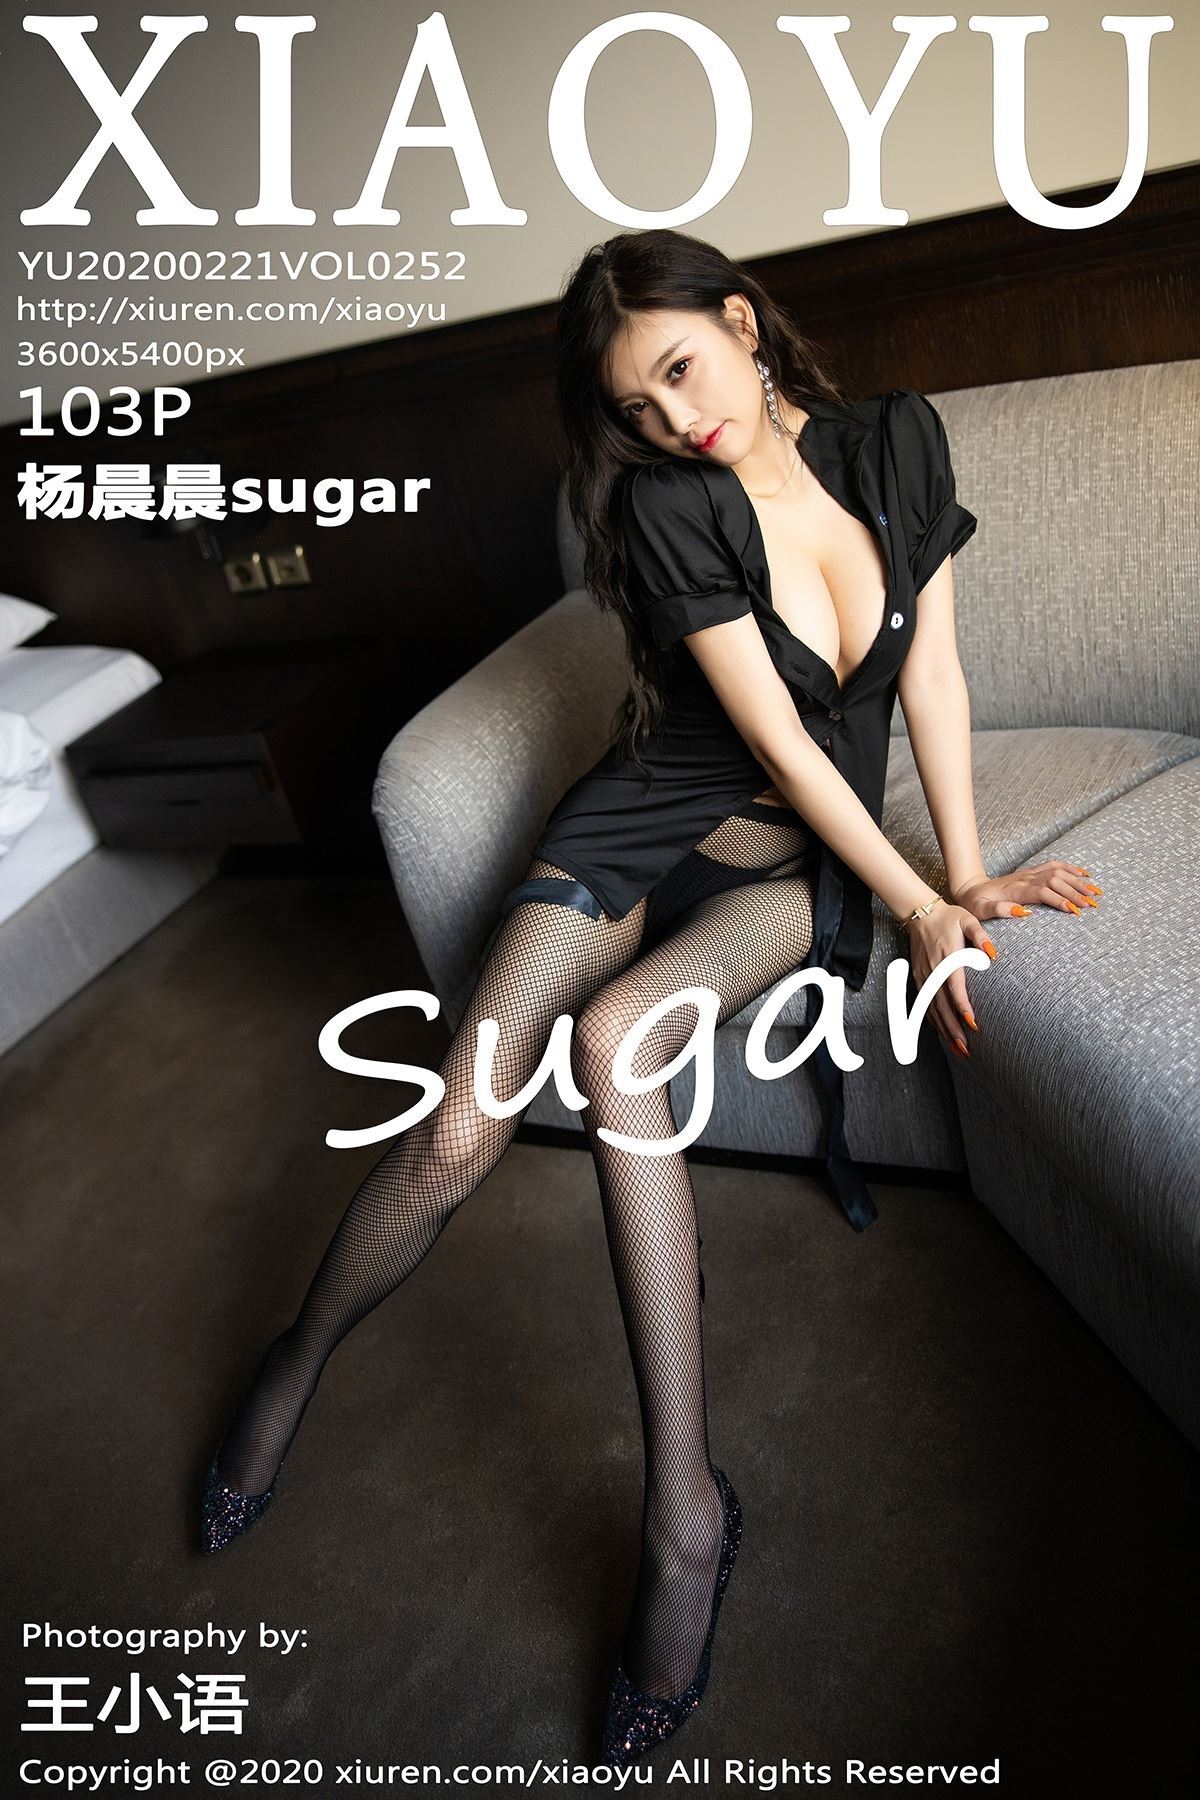 Xiaoyu language and painting world 2020.02.21 vol.252 Yang Chenchen sugar